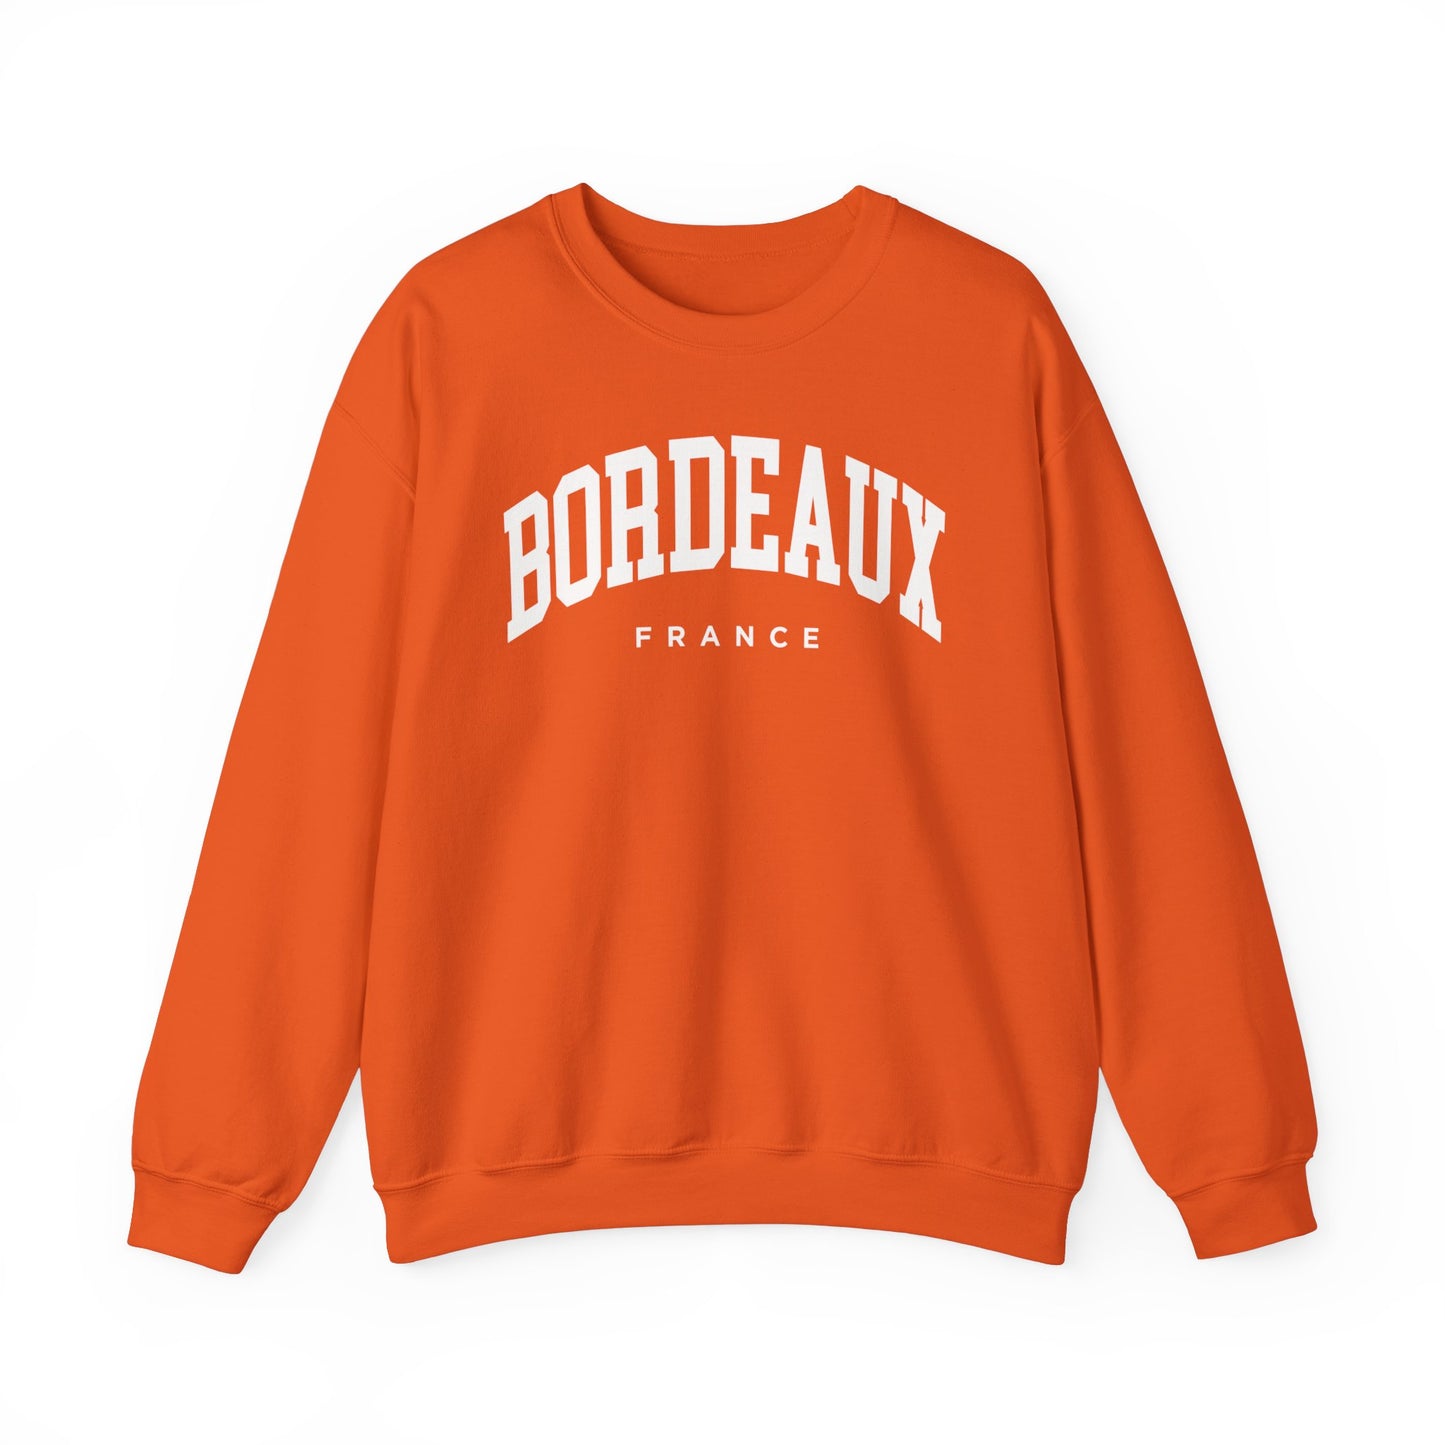 Bordeaux France Sweatshirt